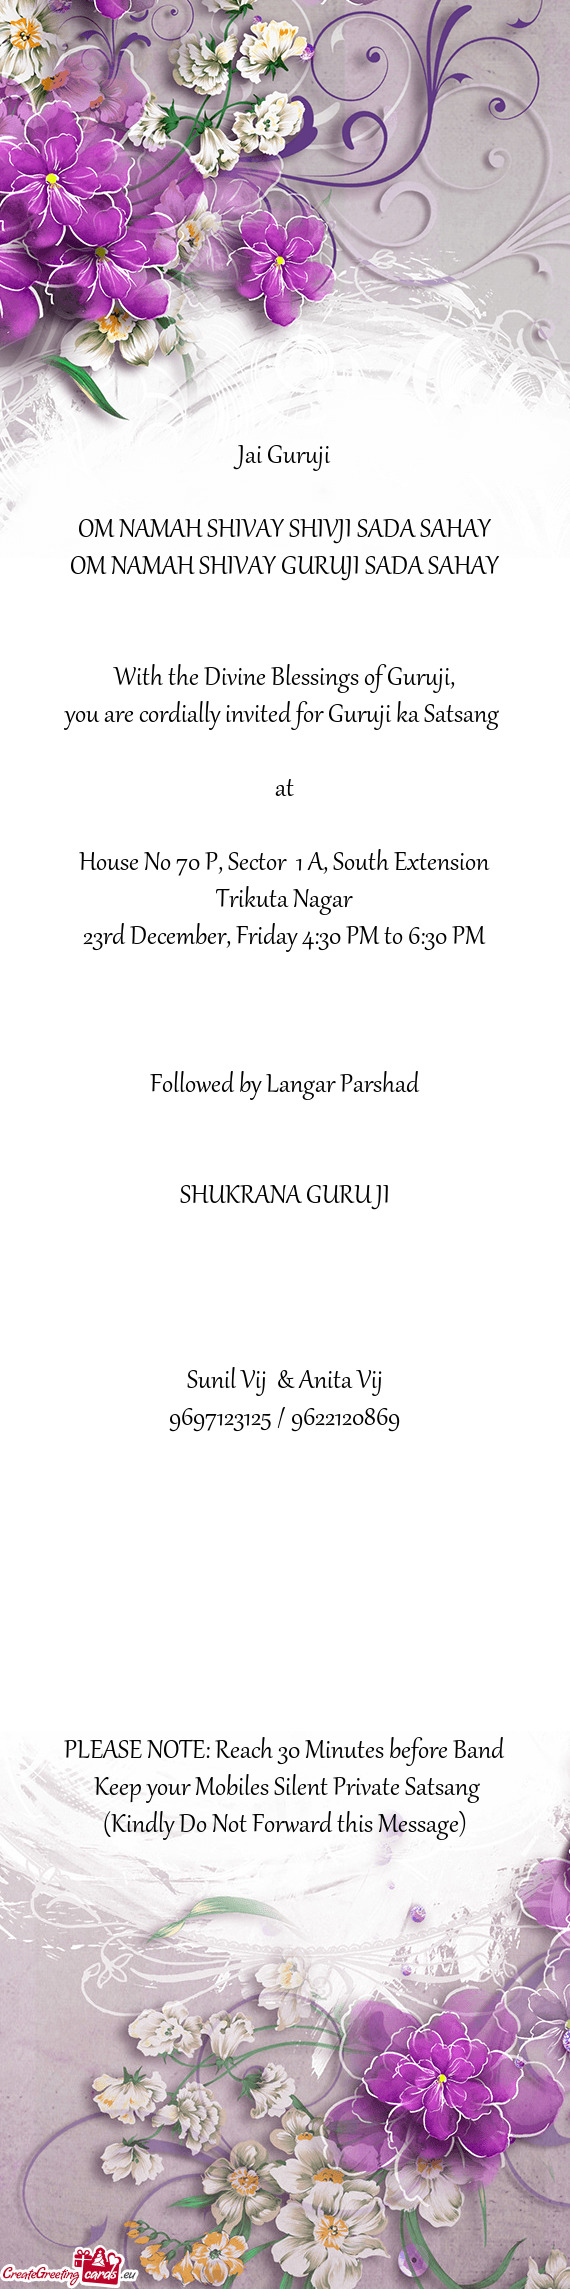 You are cordially invited for Guruji ka Satsang